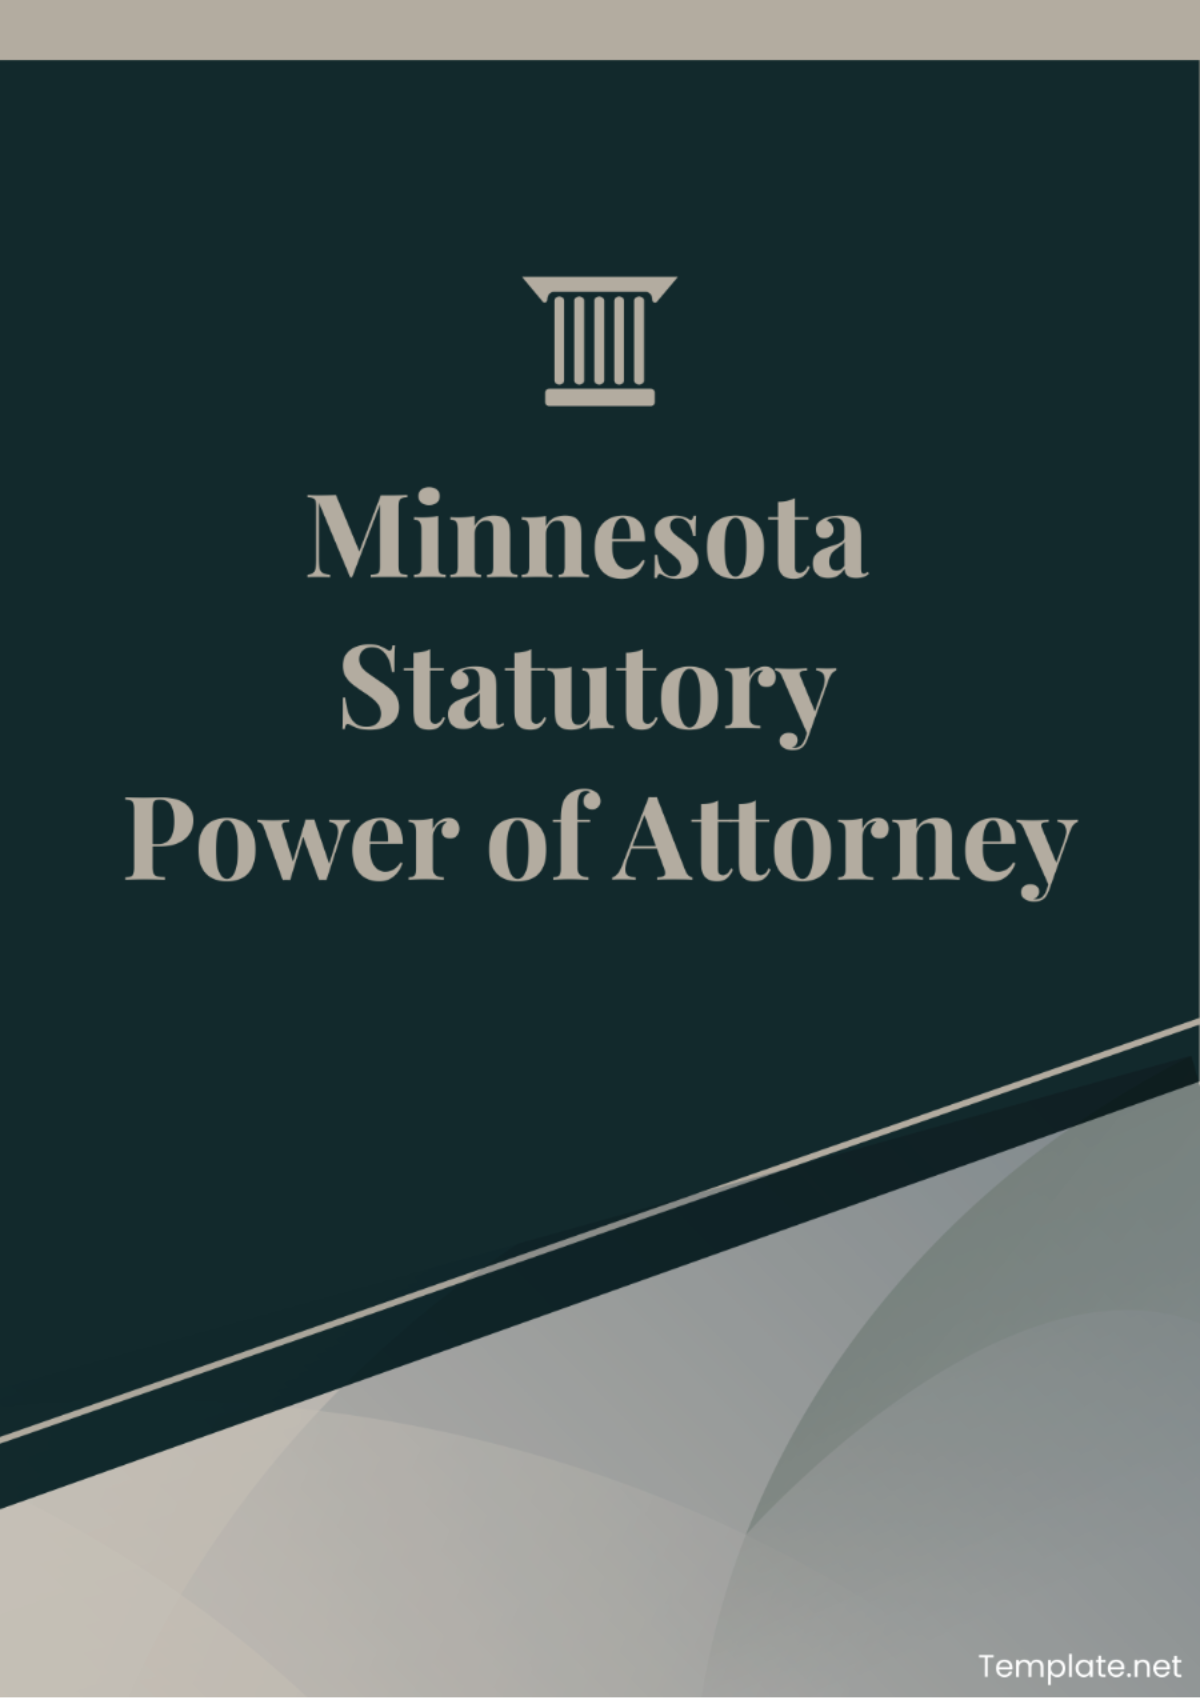 Minnesota Statutory Power of Attorney Template